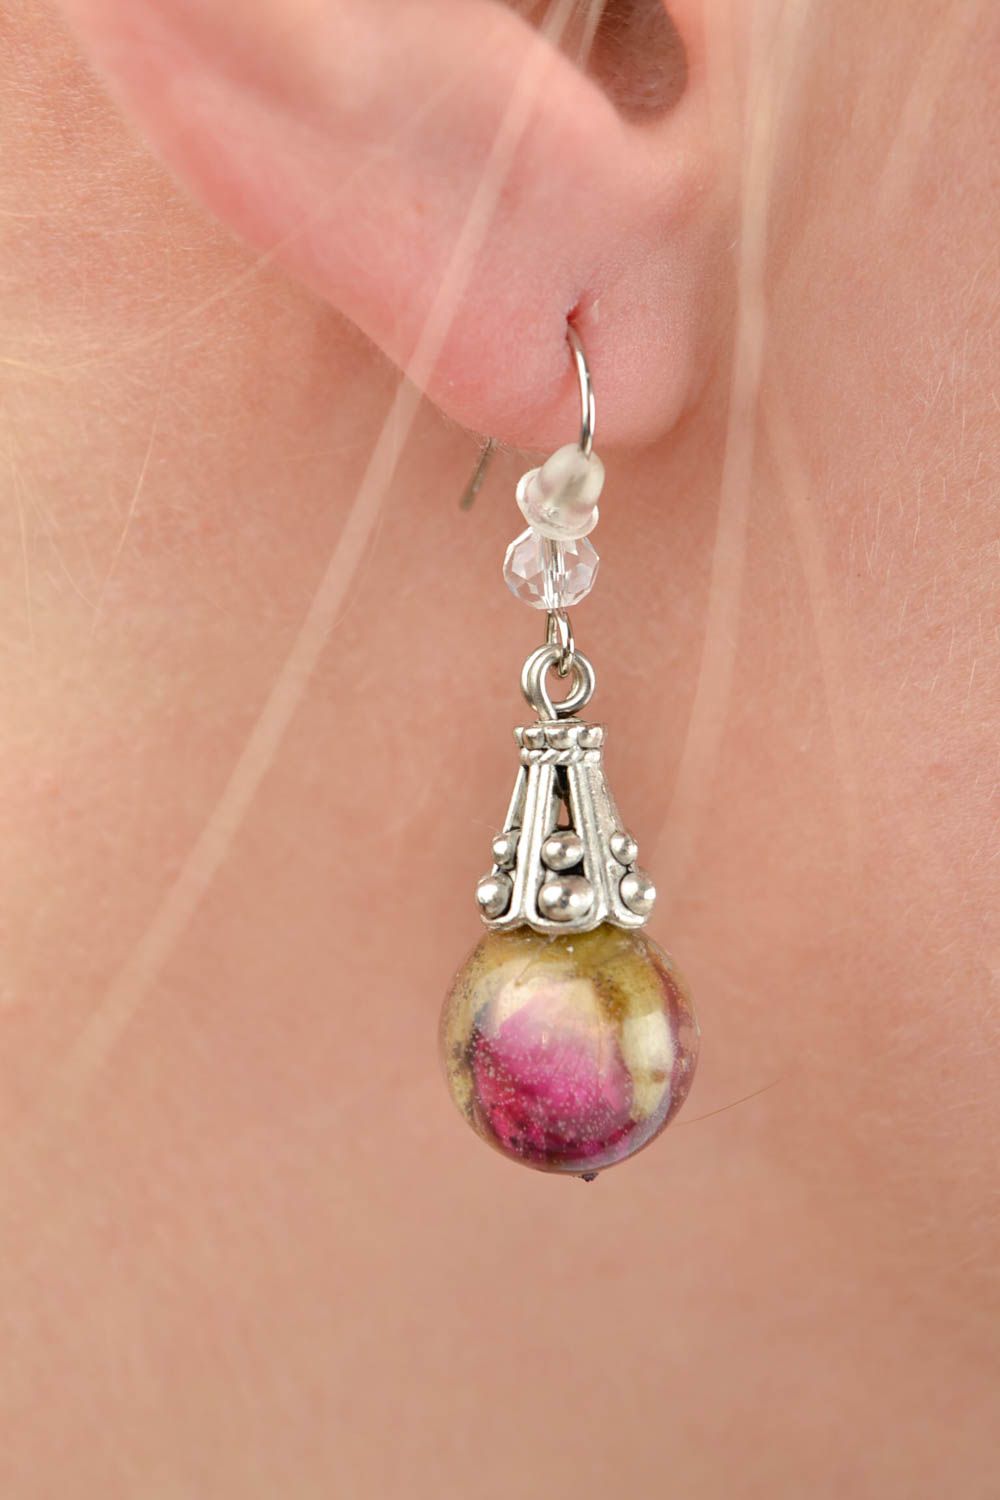 Handmade designer earrings unusual jewelry with roses stylish elegant jewelry photo 2